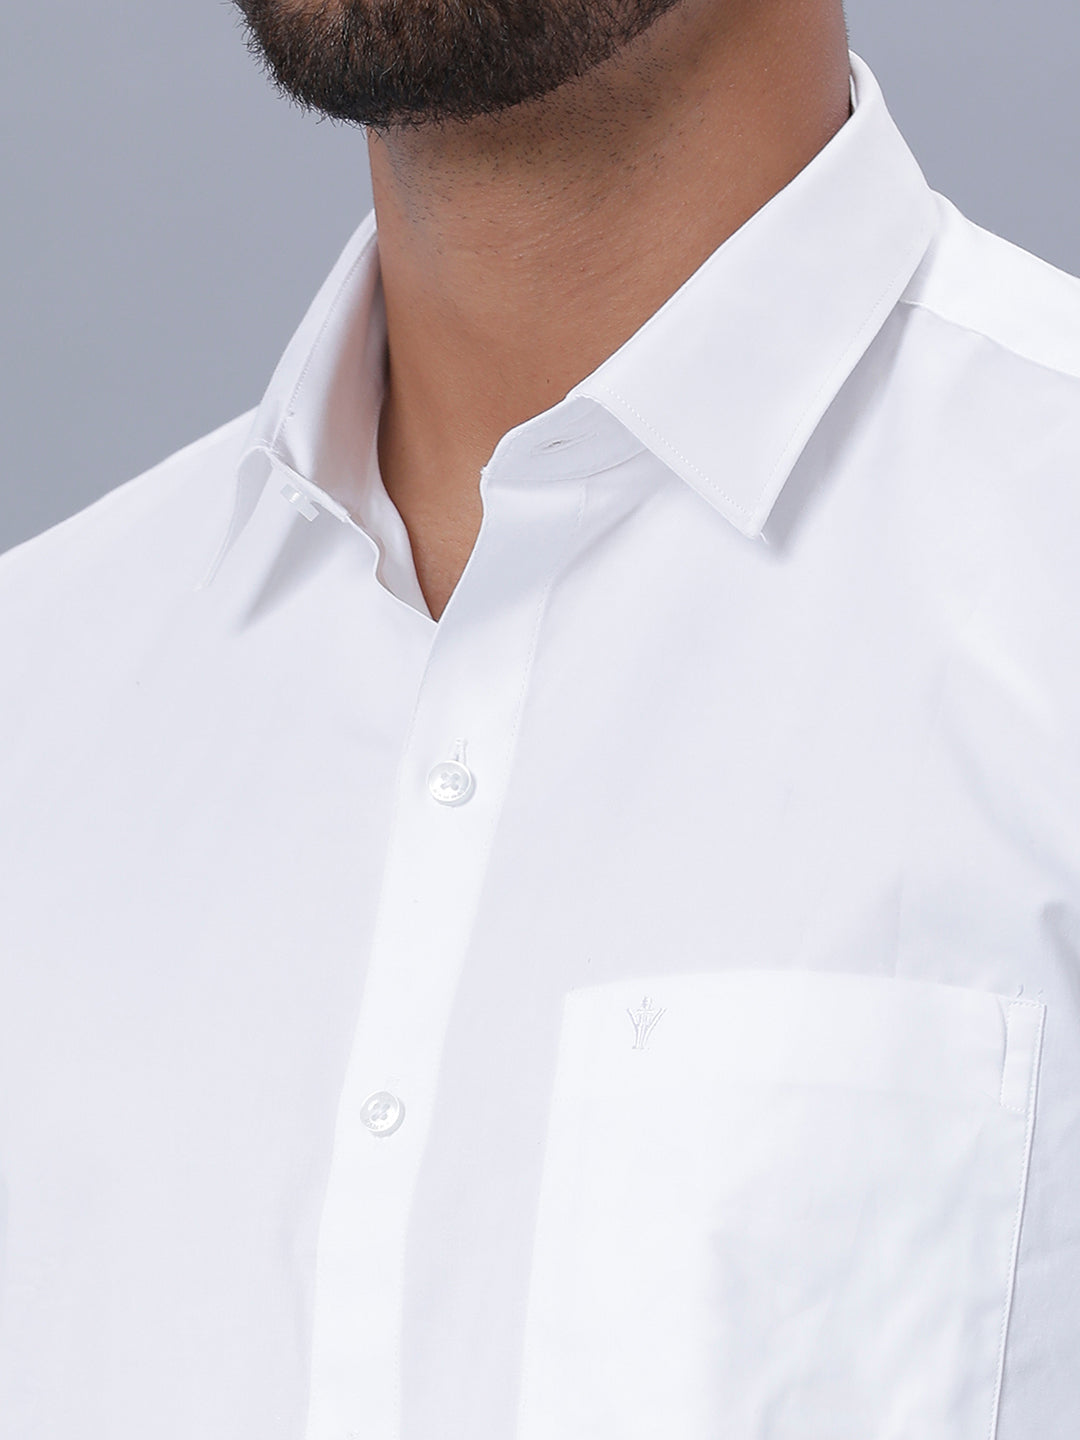 Mens Wrinkle Free White Full Sleeves Shirt, Double Dhoti, Towel & Belt Combo-Zoom view